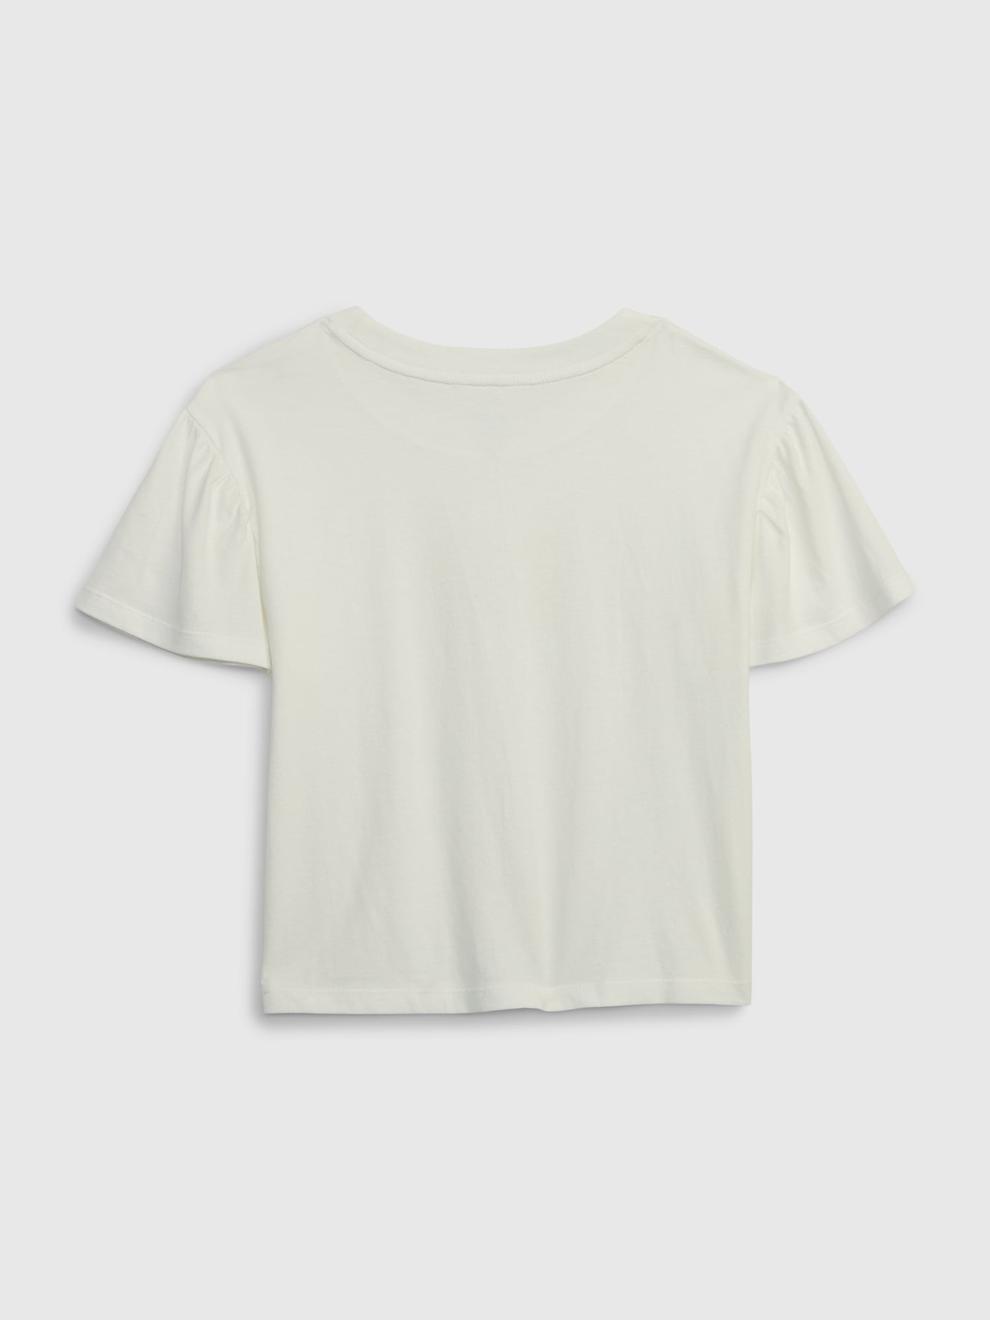 Kids Gap Logo Flutter Sleeve T-Shirt offers at 69 Dhs in Gap